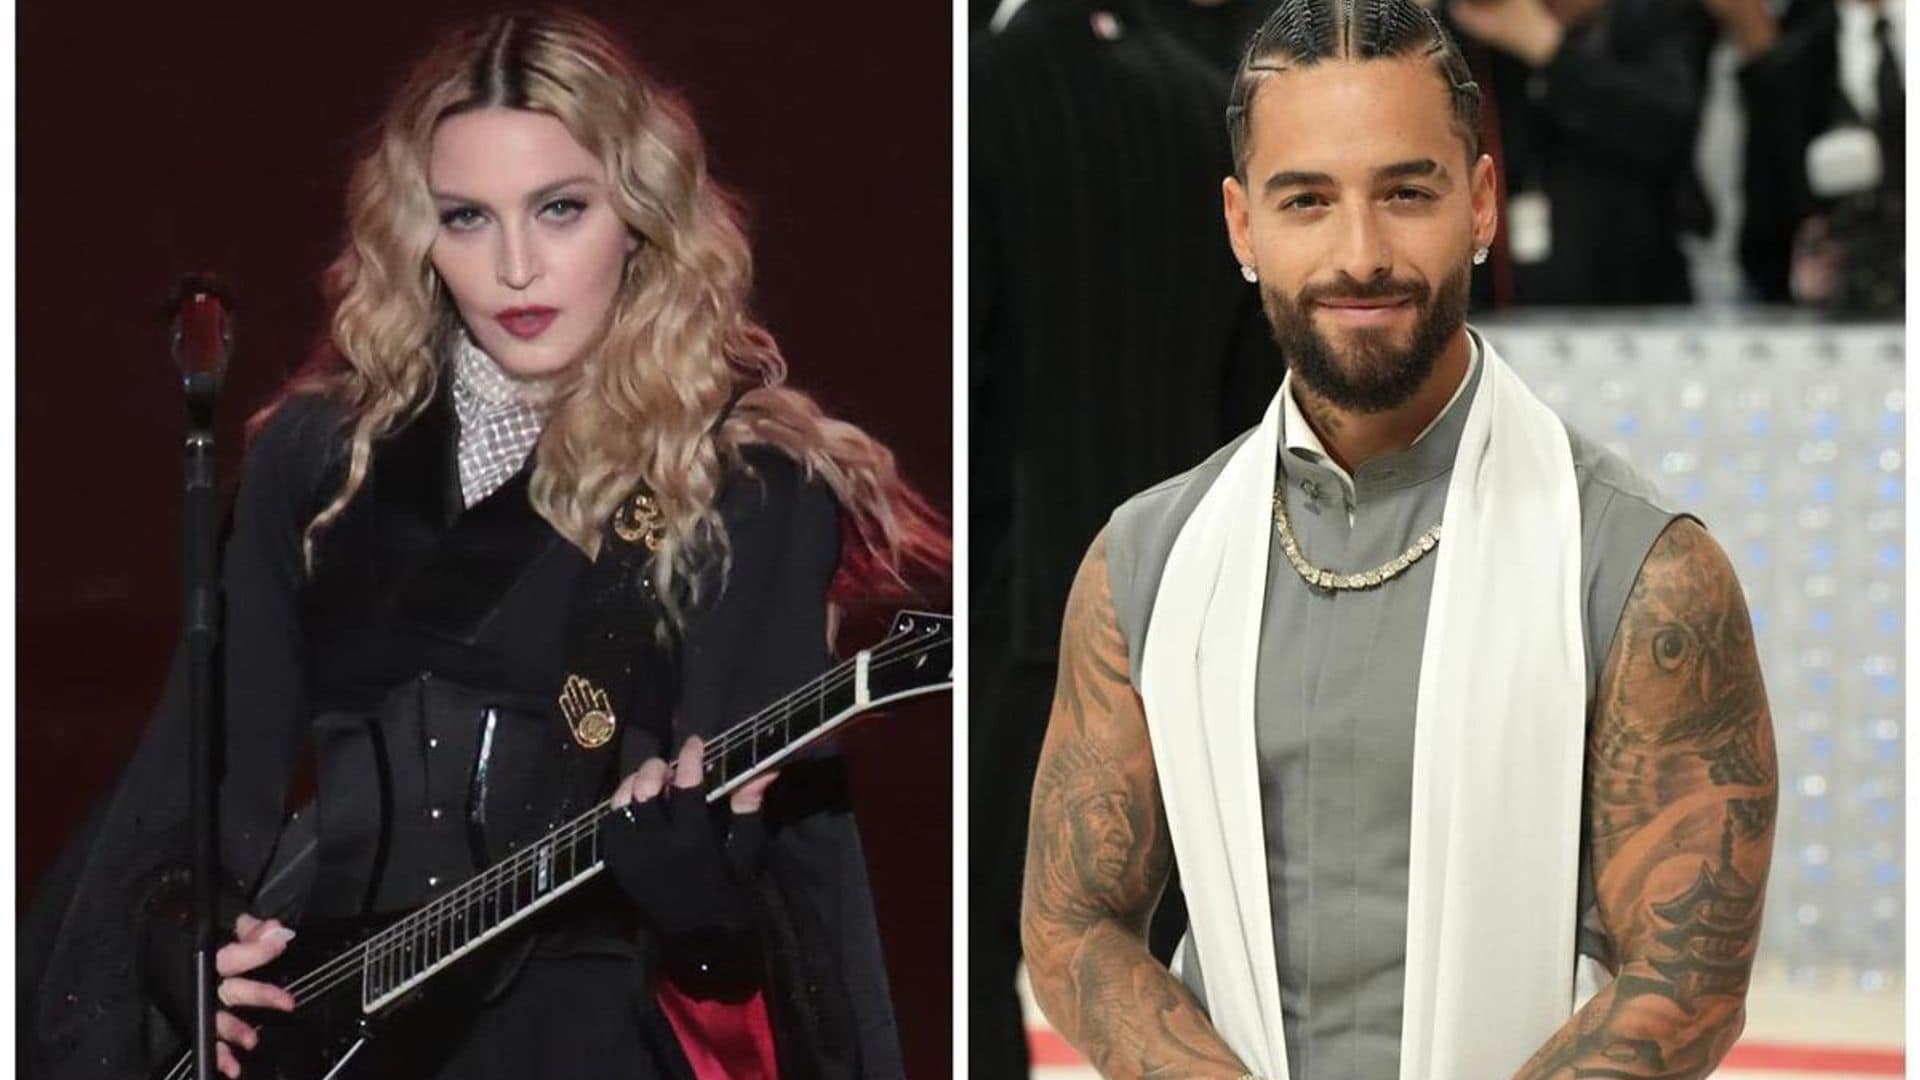 Madonna and Maluma have ‘insane’ chemistry: Report